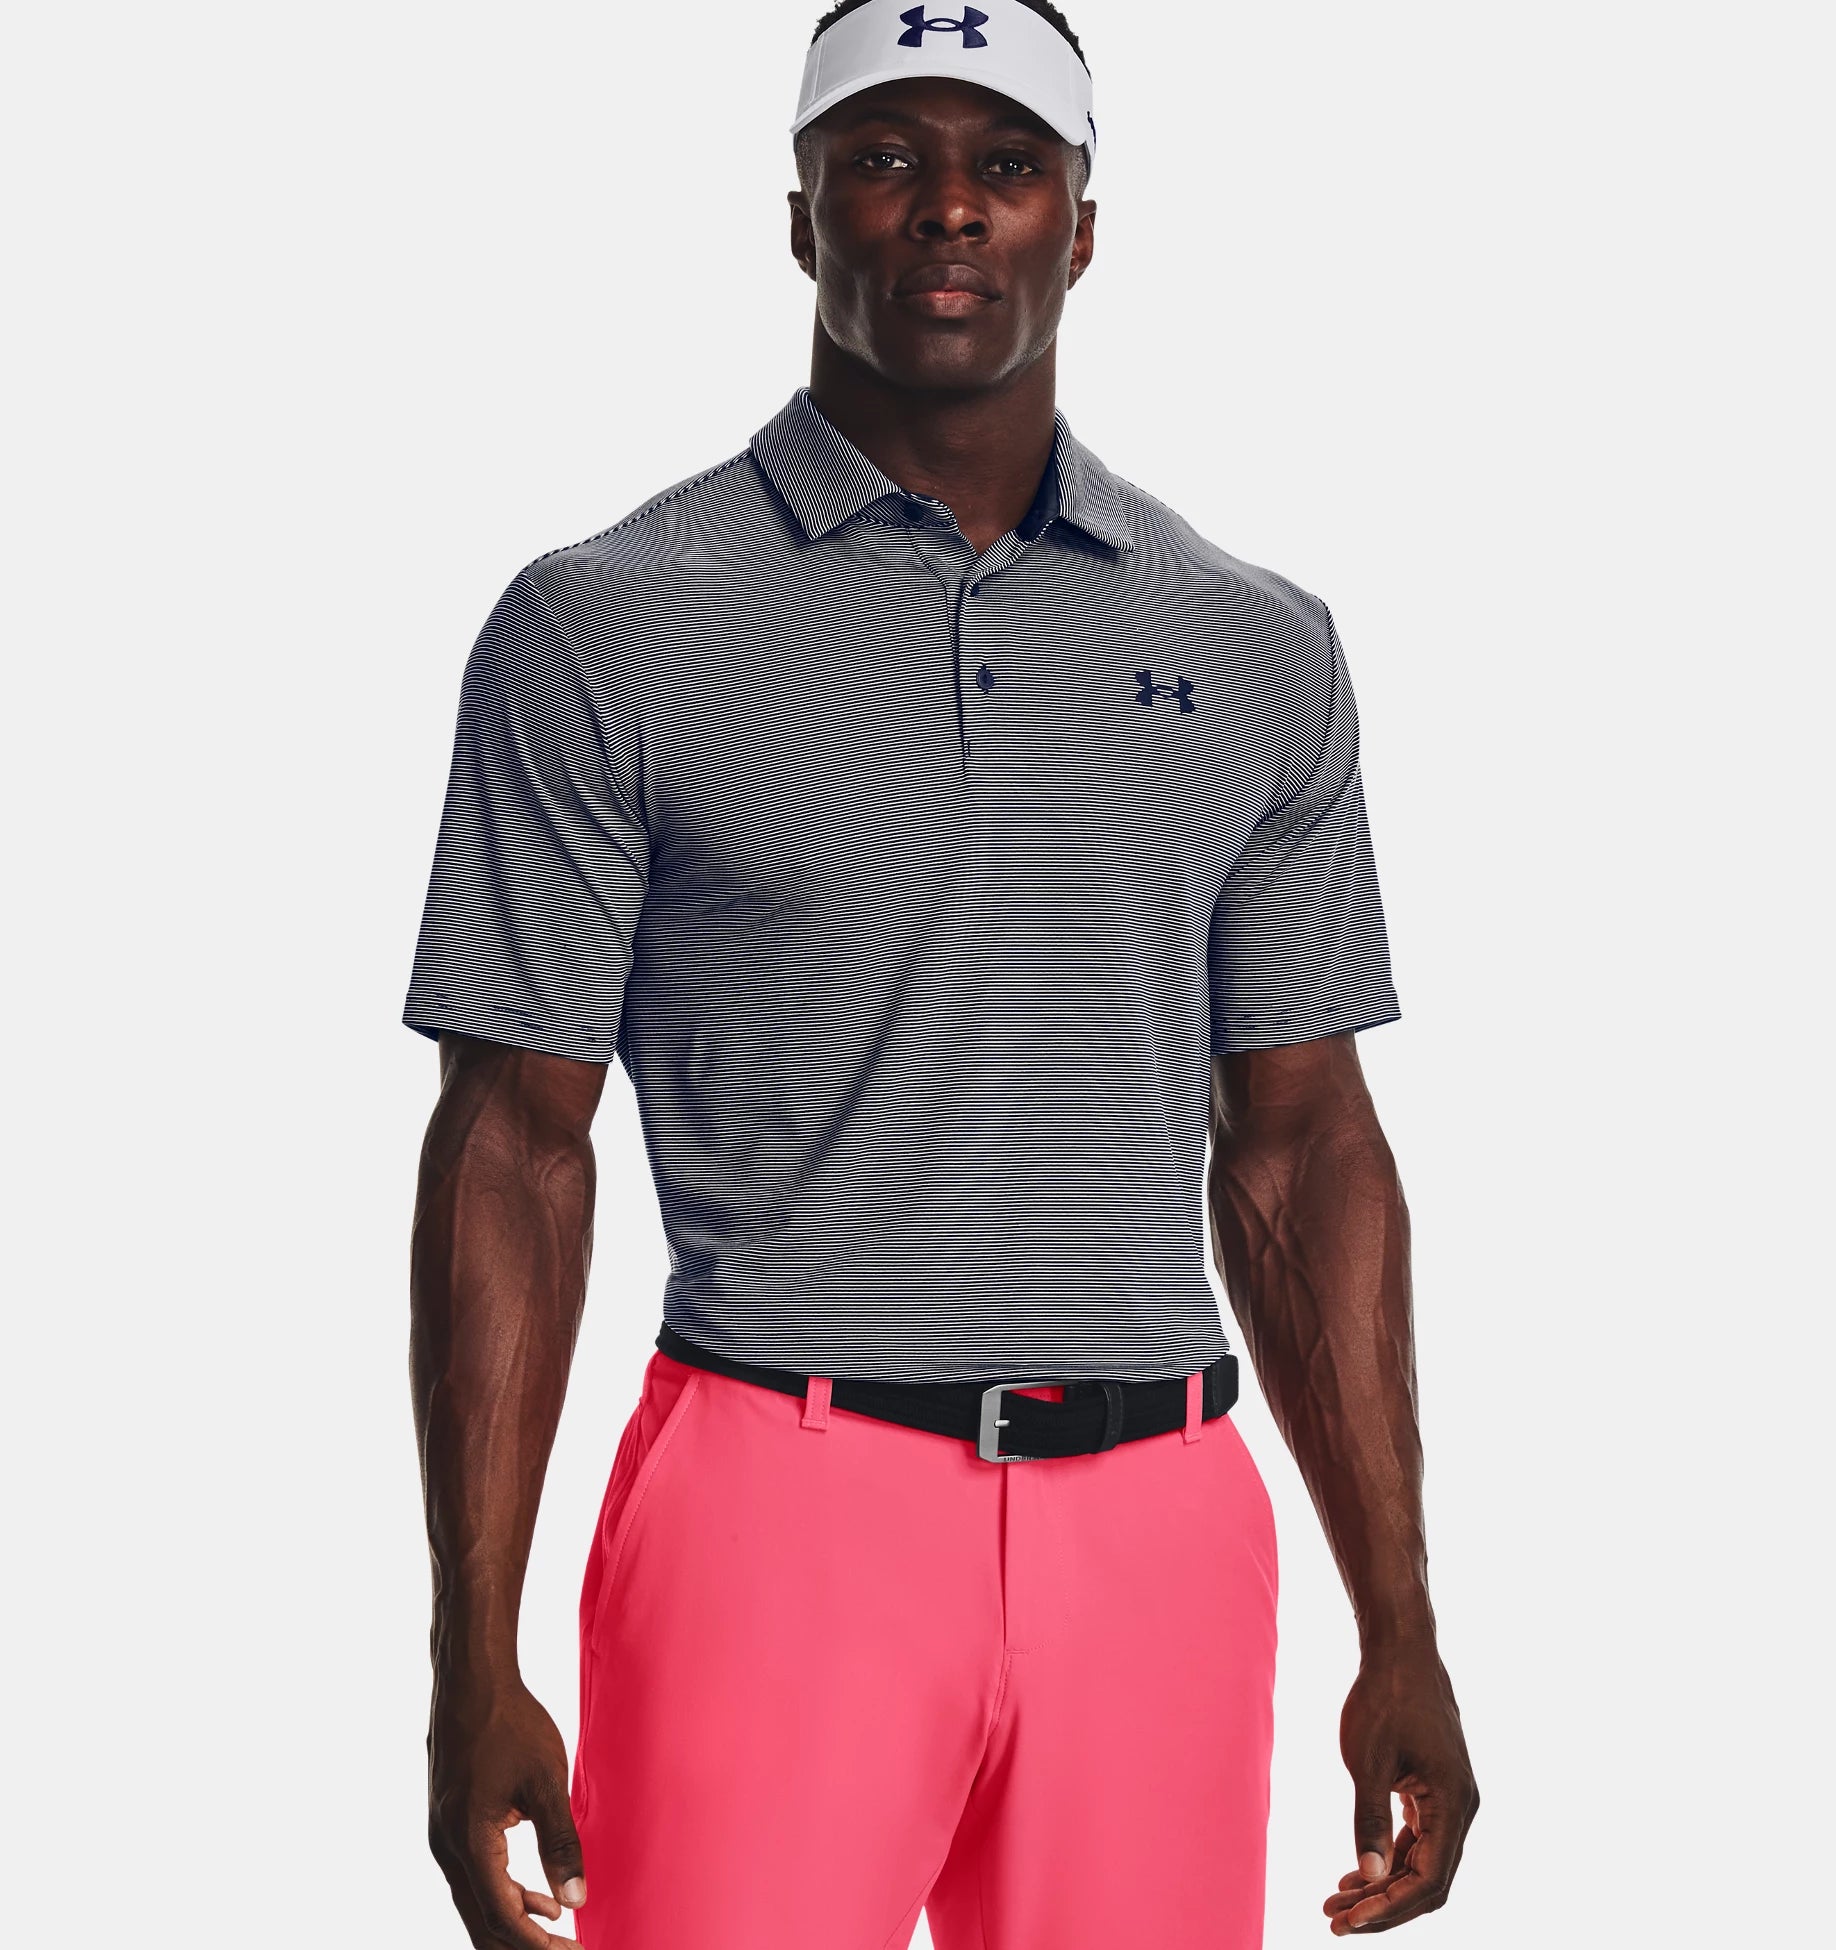 Men's Long Sleeve Polo Shirts Striped Quick Dry Golf Shirts - Dark Grey / S